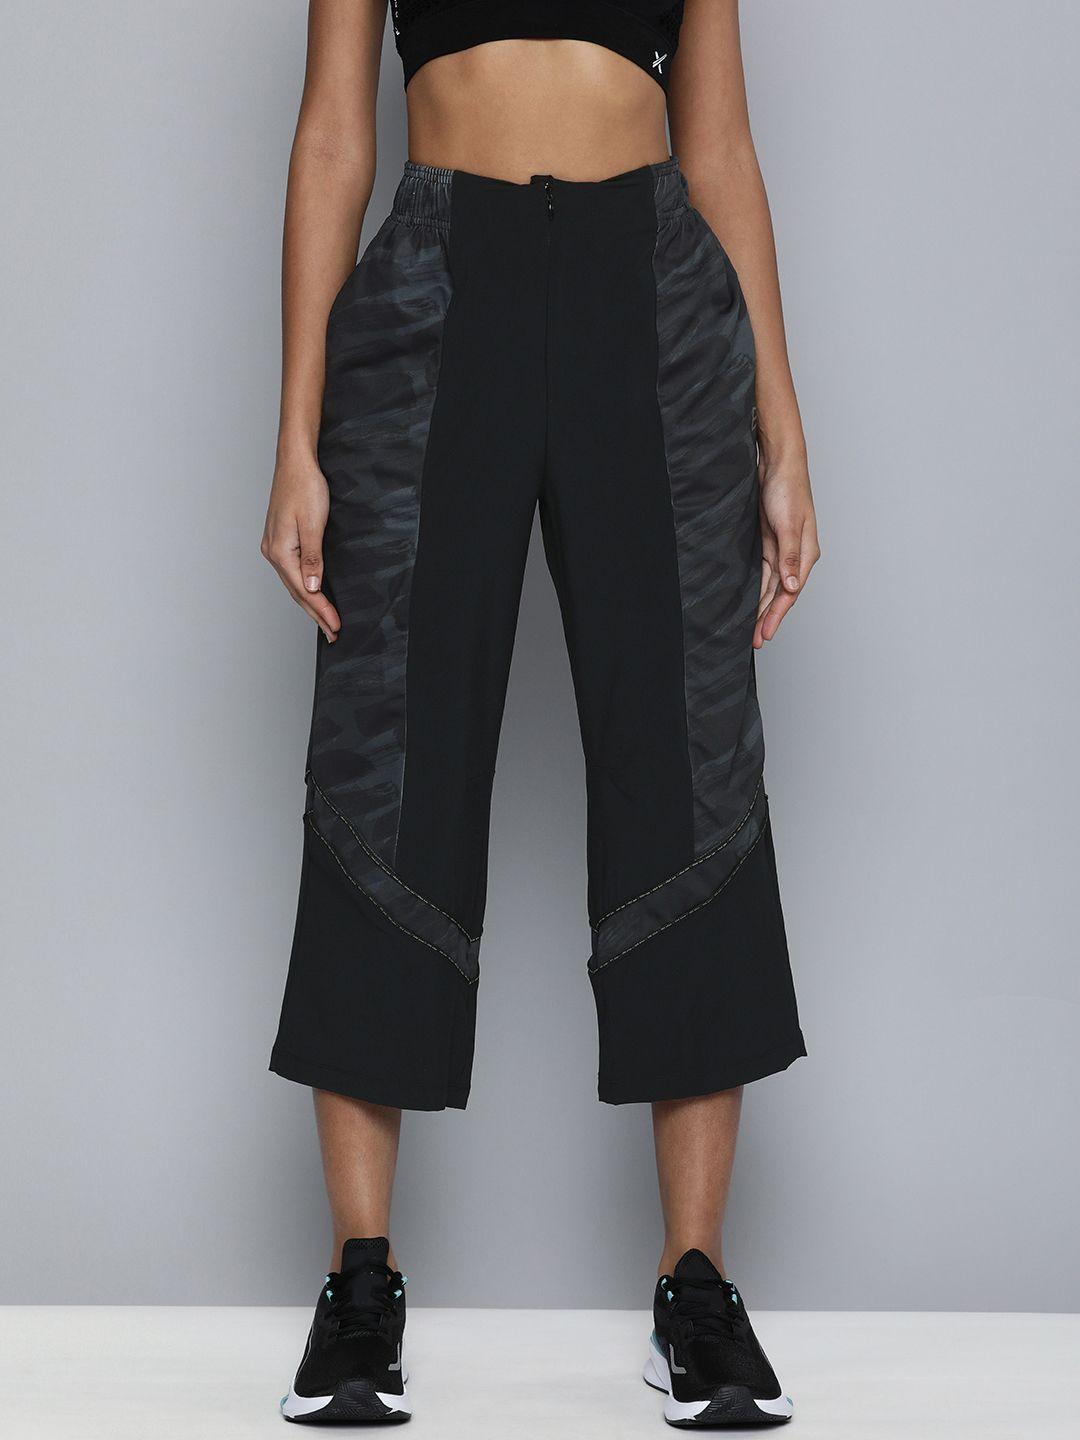 hrx by hrithik roshan edge women jet black rapid-dry printed trousers